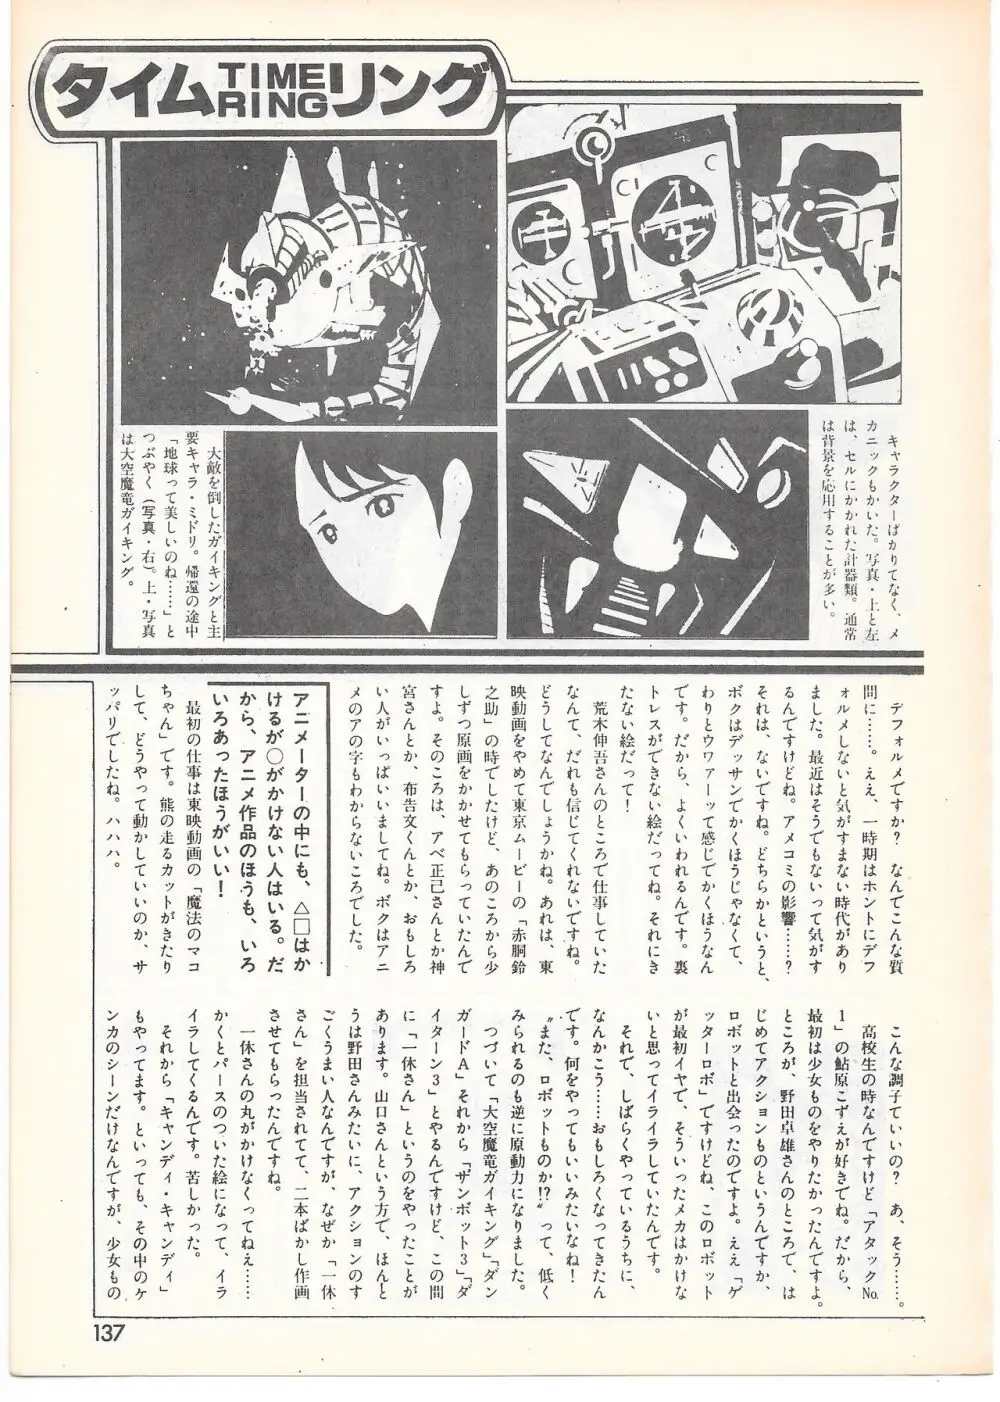 THE ANIMATOR 1 金田伊功特集号 - page132